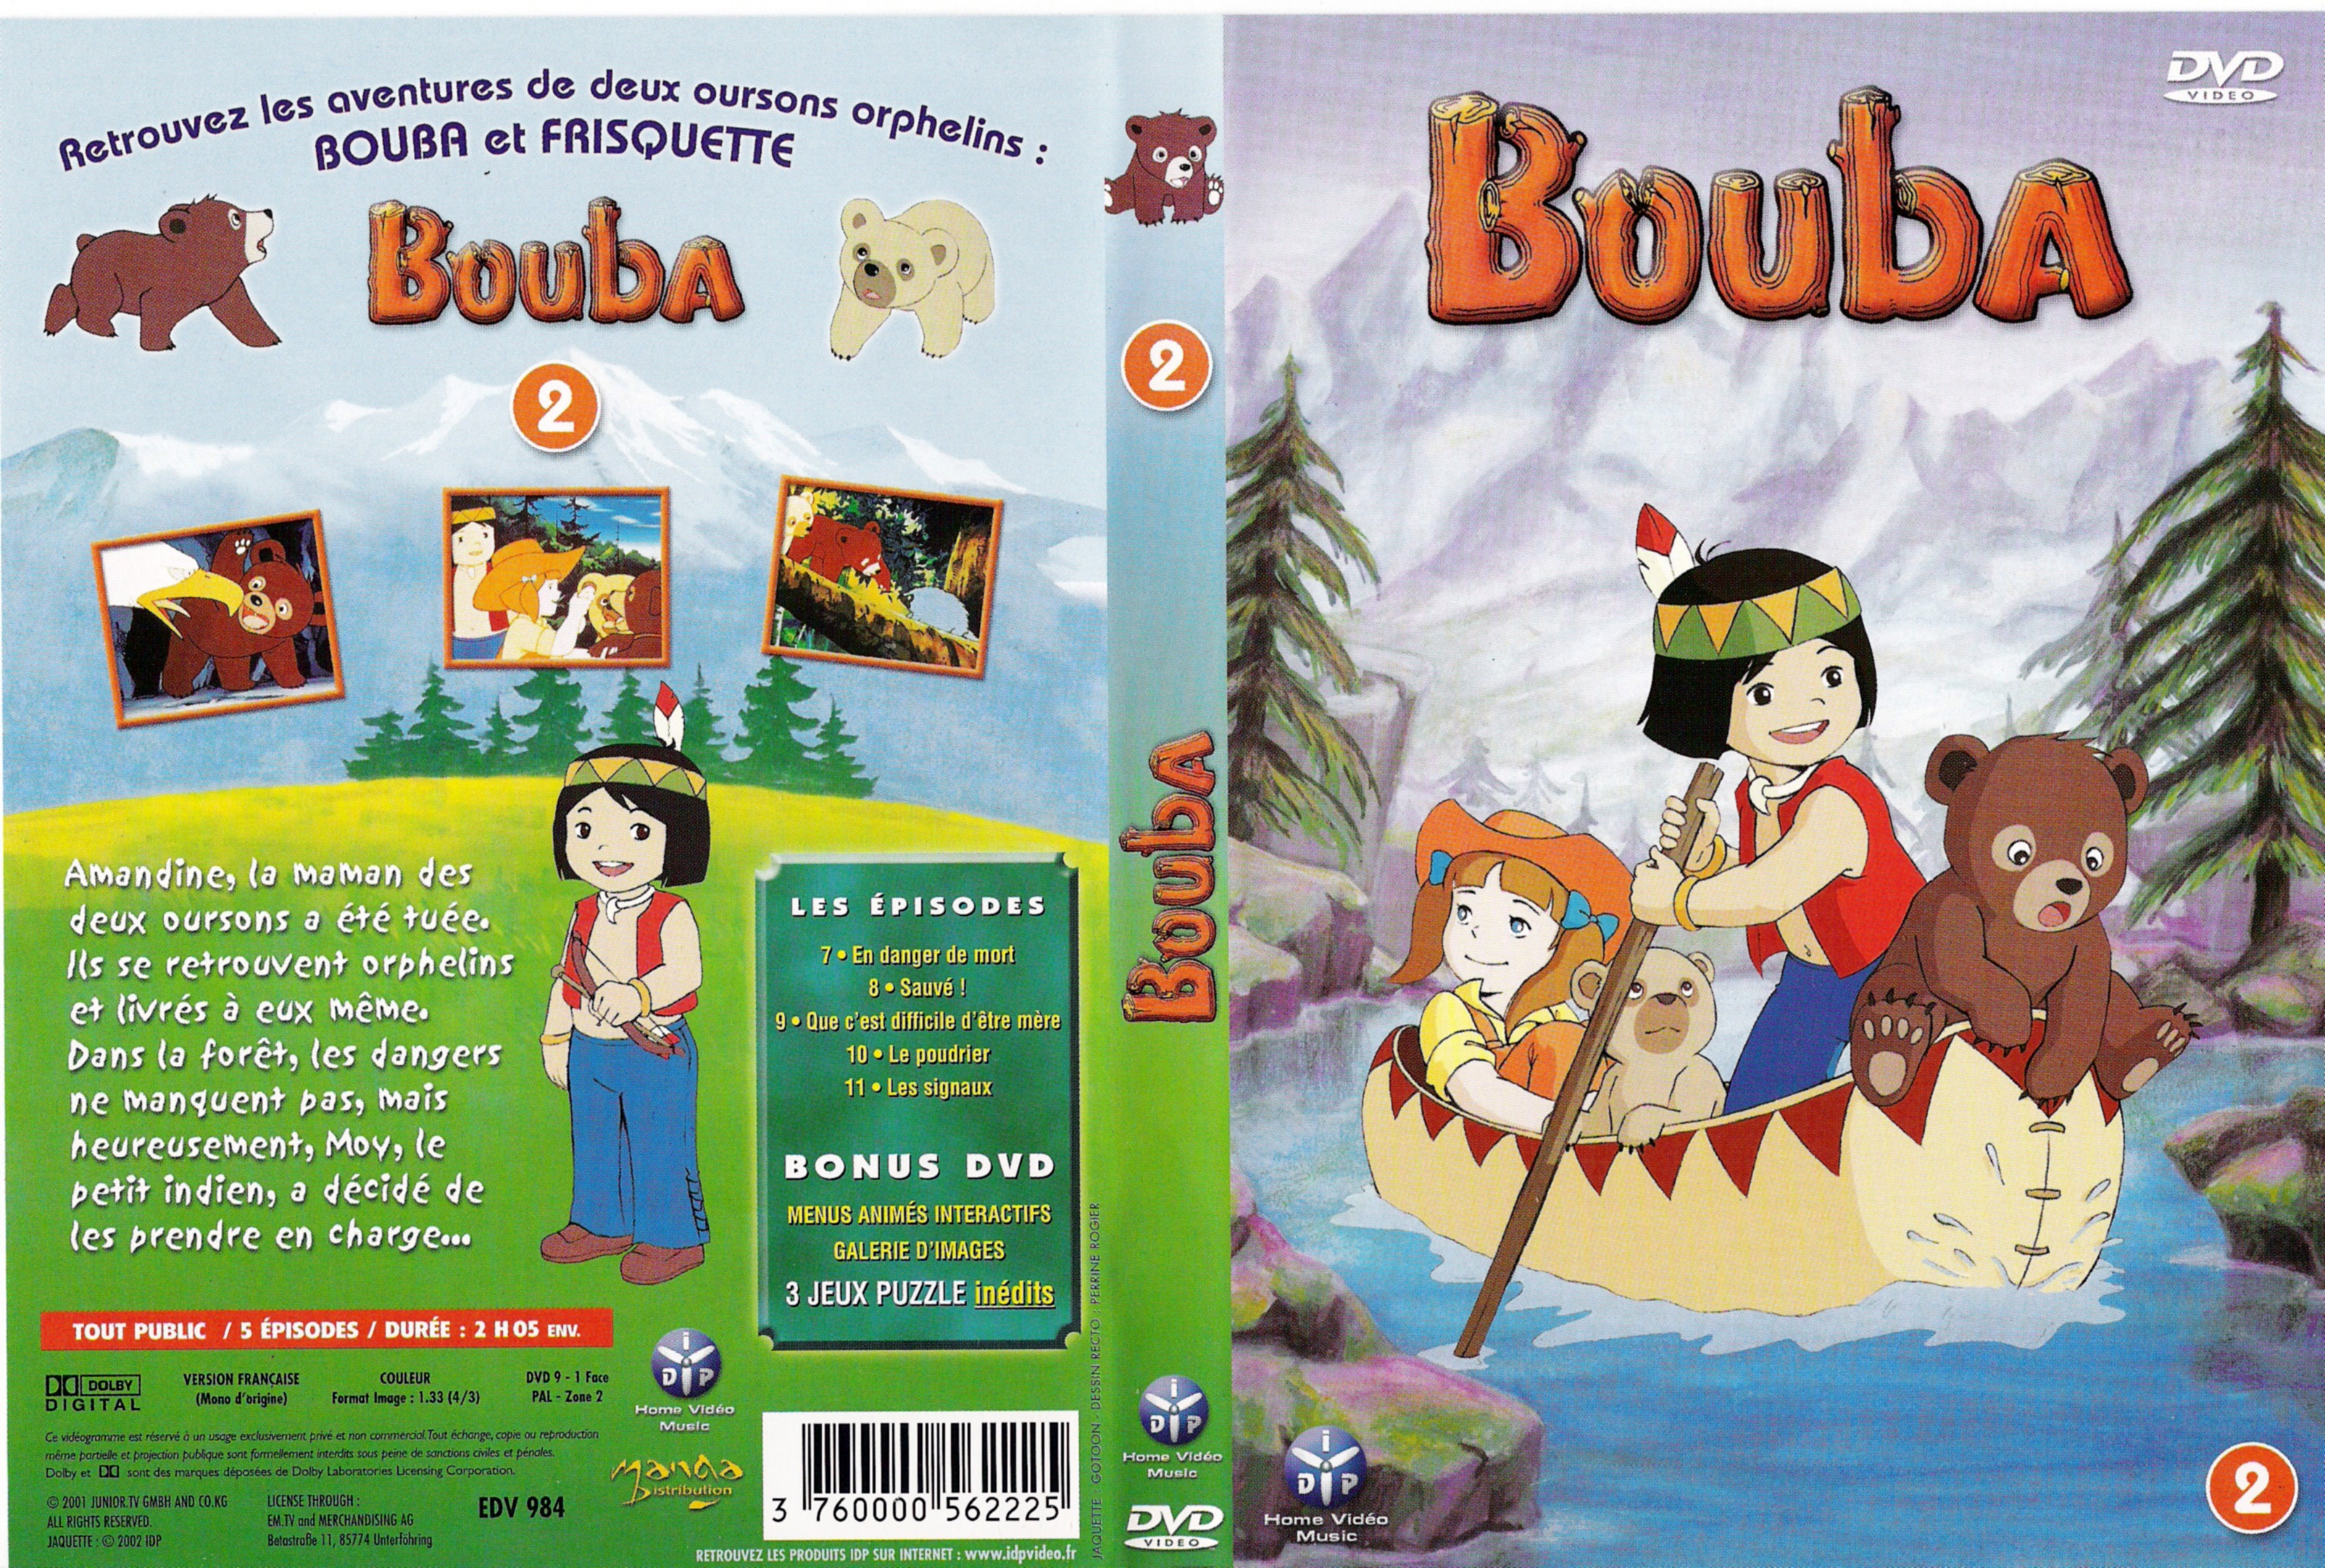 Jaquette DVD Bouba vol 2